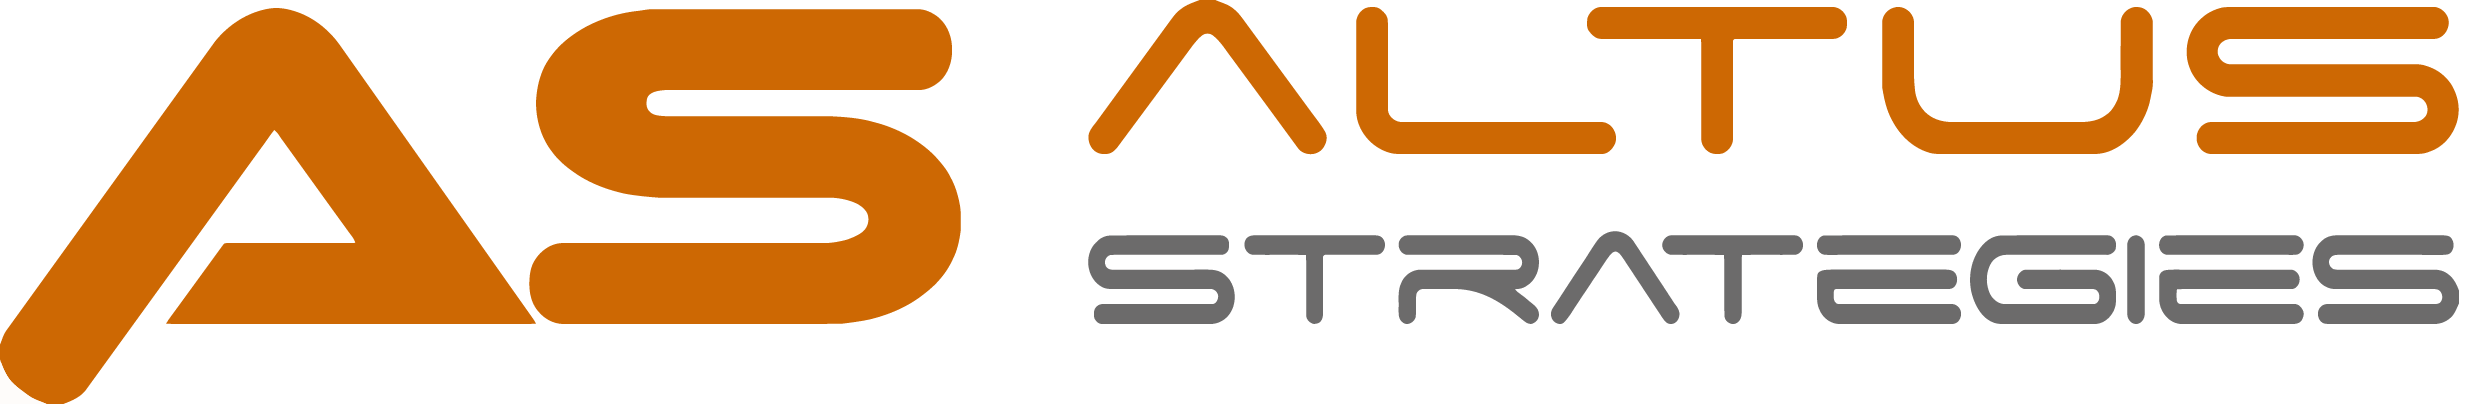 Altus Strategies Plc, Thursday, February 18, 2021, Press release picture